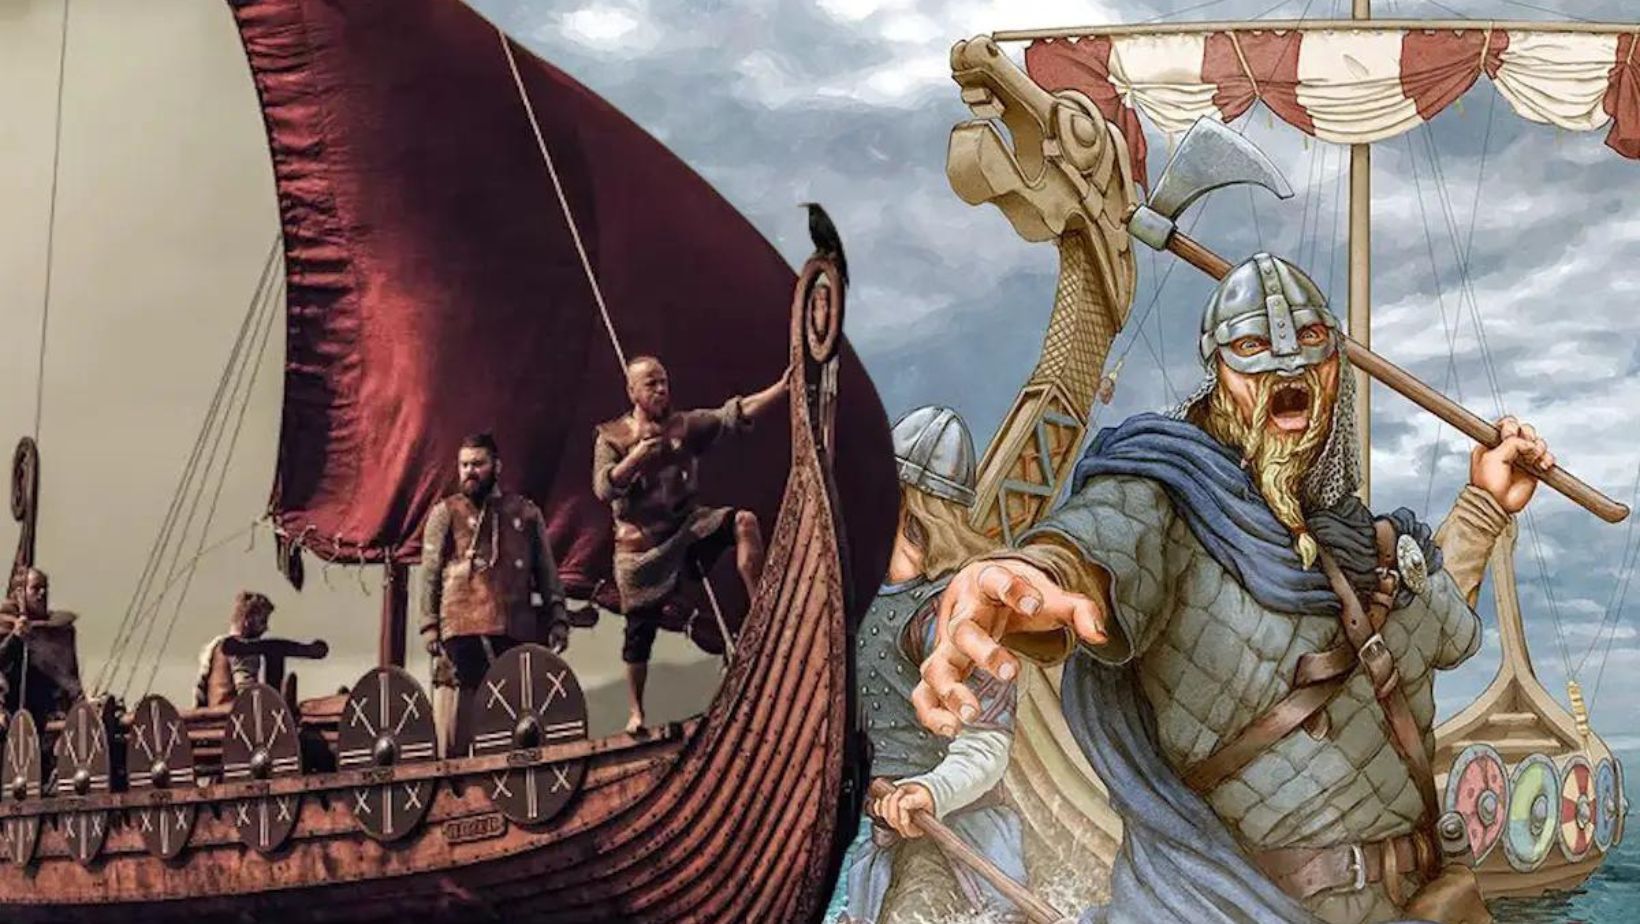 How did Viking ships navigate rivers